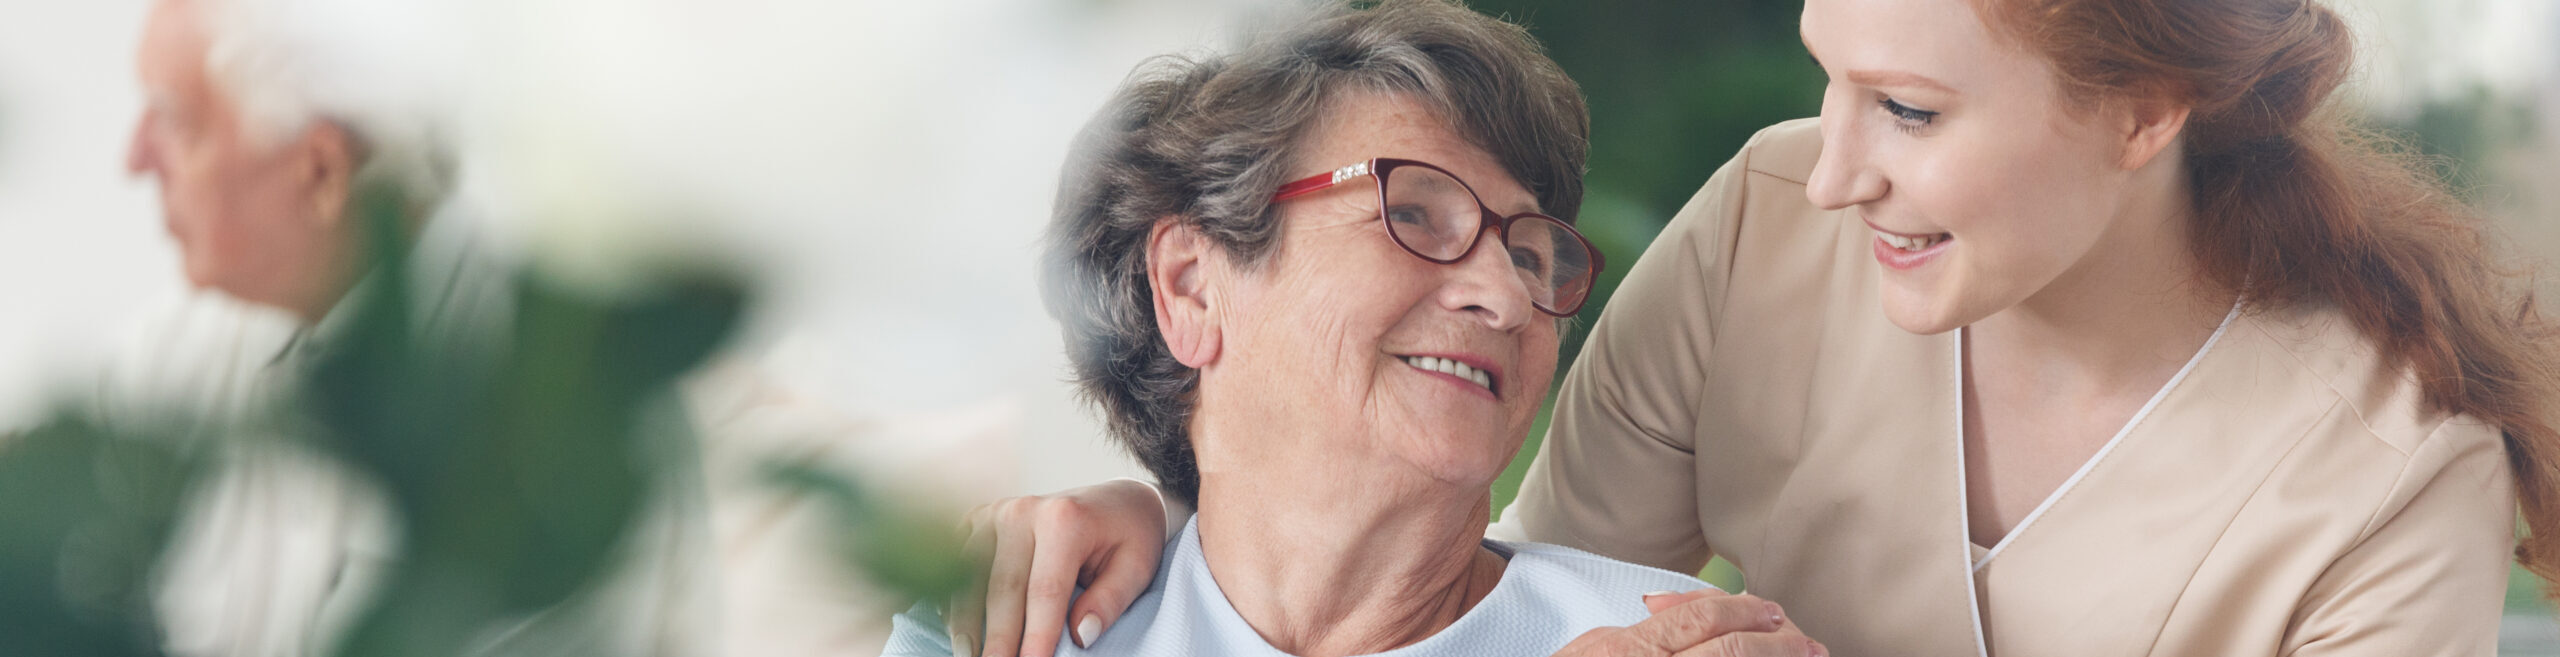 Professional helpful caregiver comforting smiling senior woman at Nursing Home